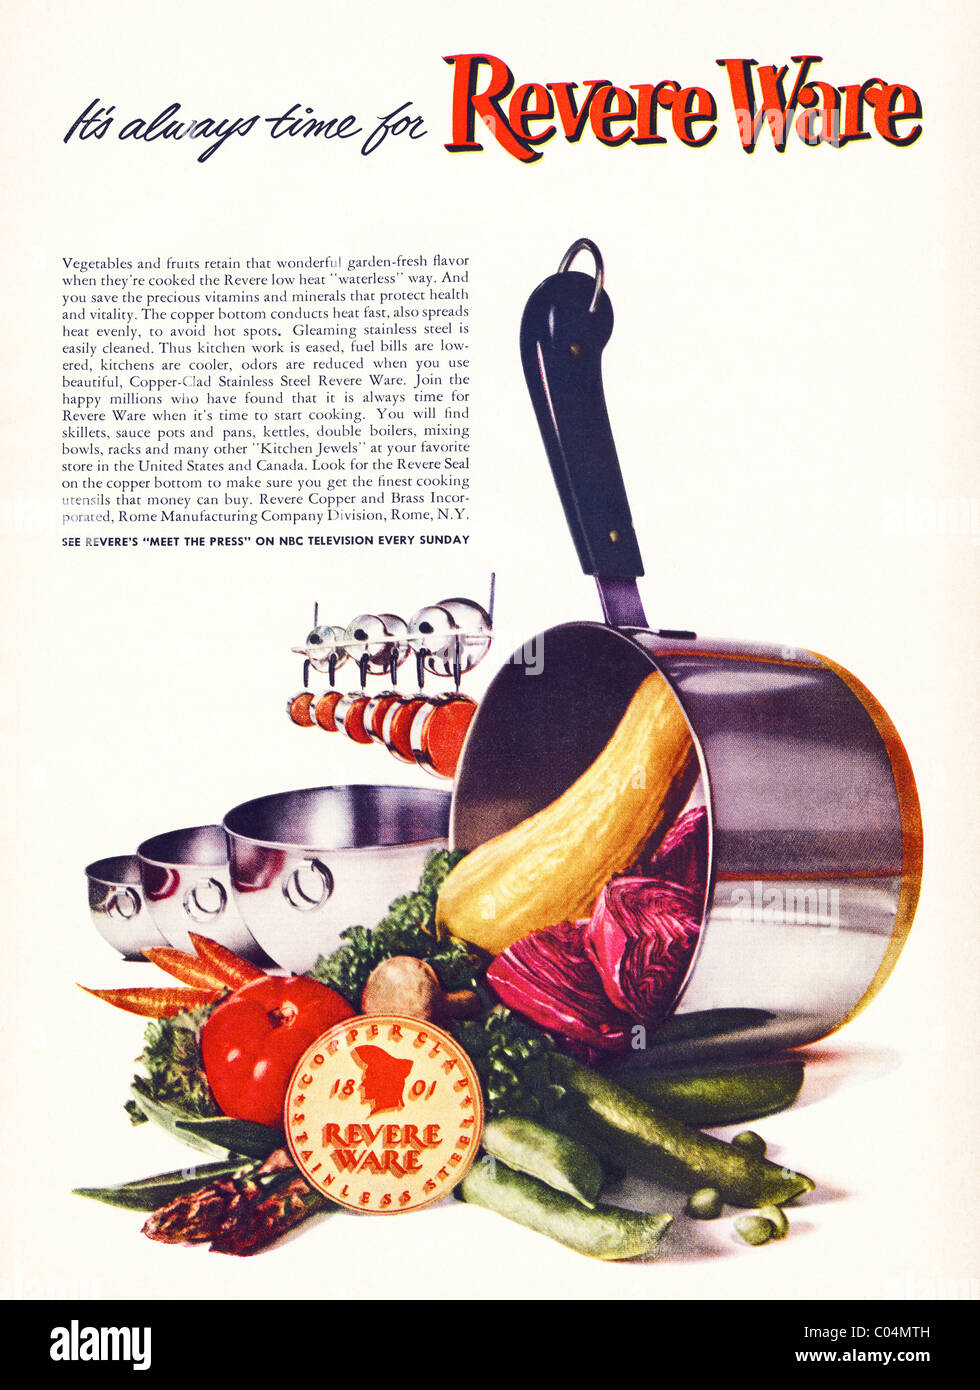 Original 1950s full page advertisement in American consumer magazine for REVERE kitchen ware Stock Photo